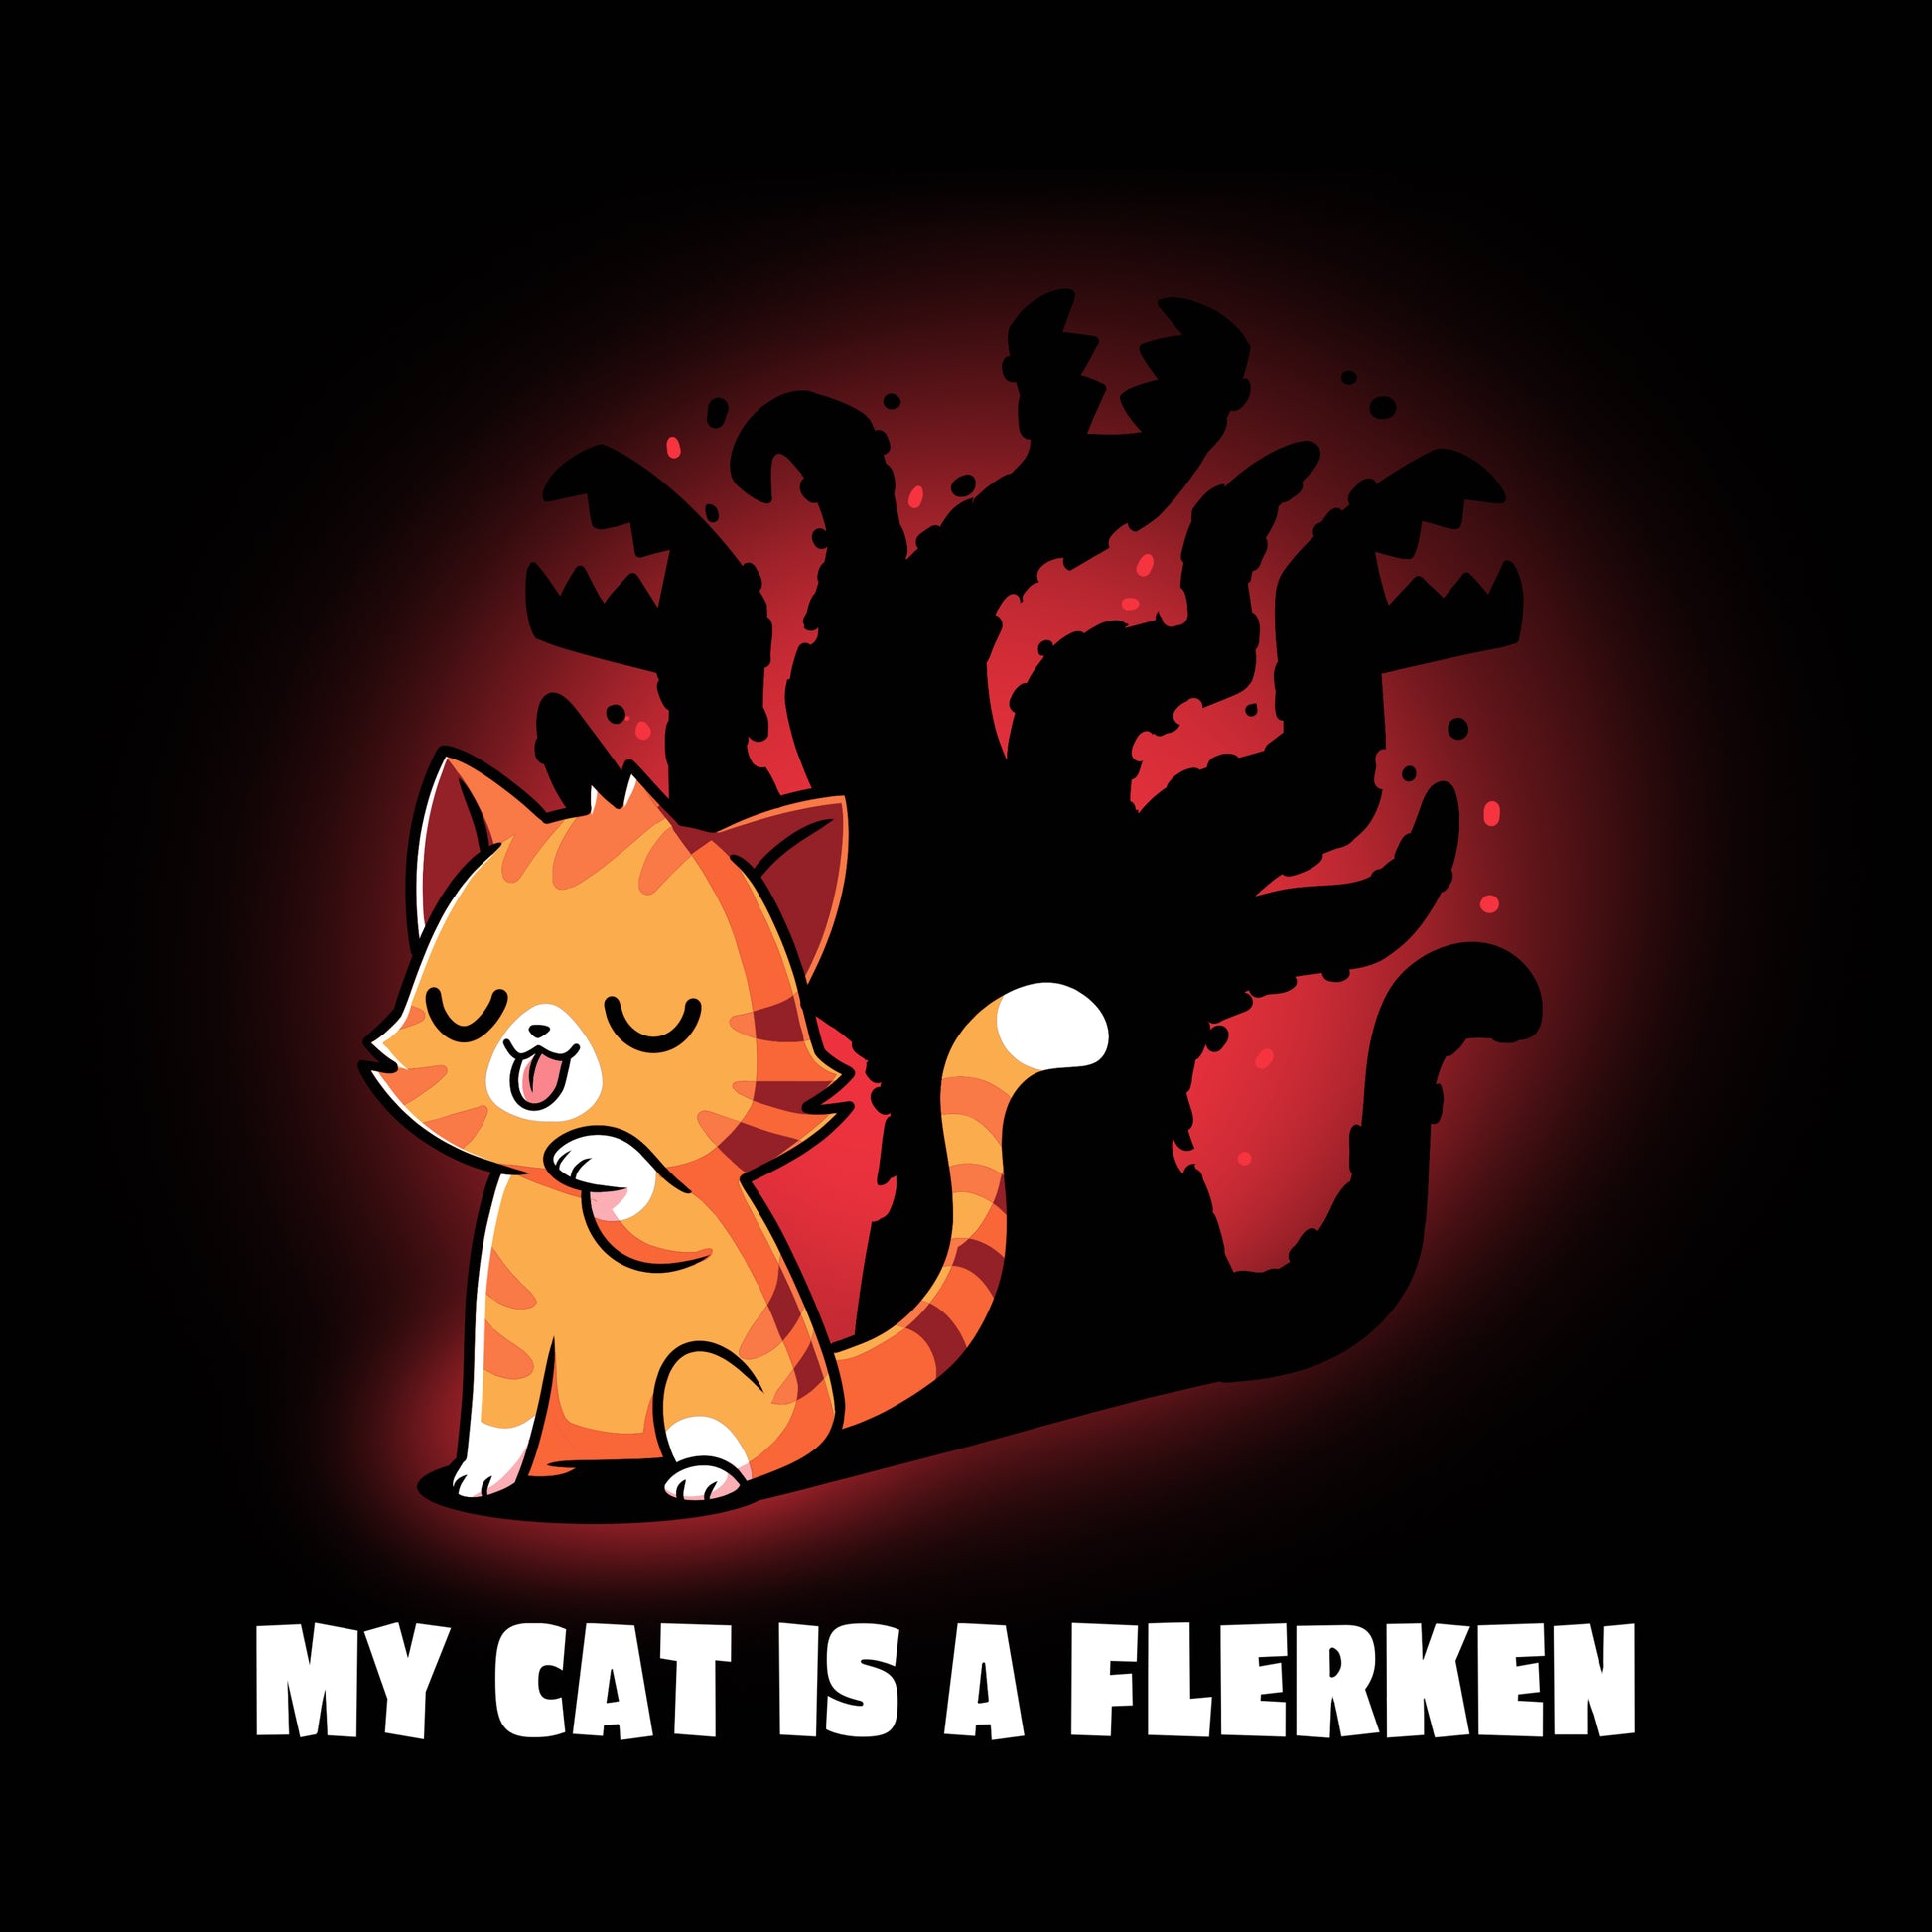 My flerken is a Marvel-loving cat.